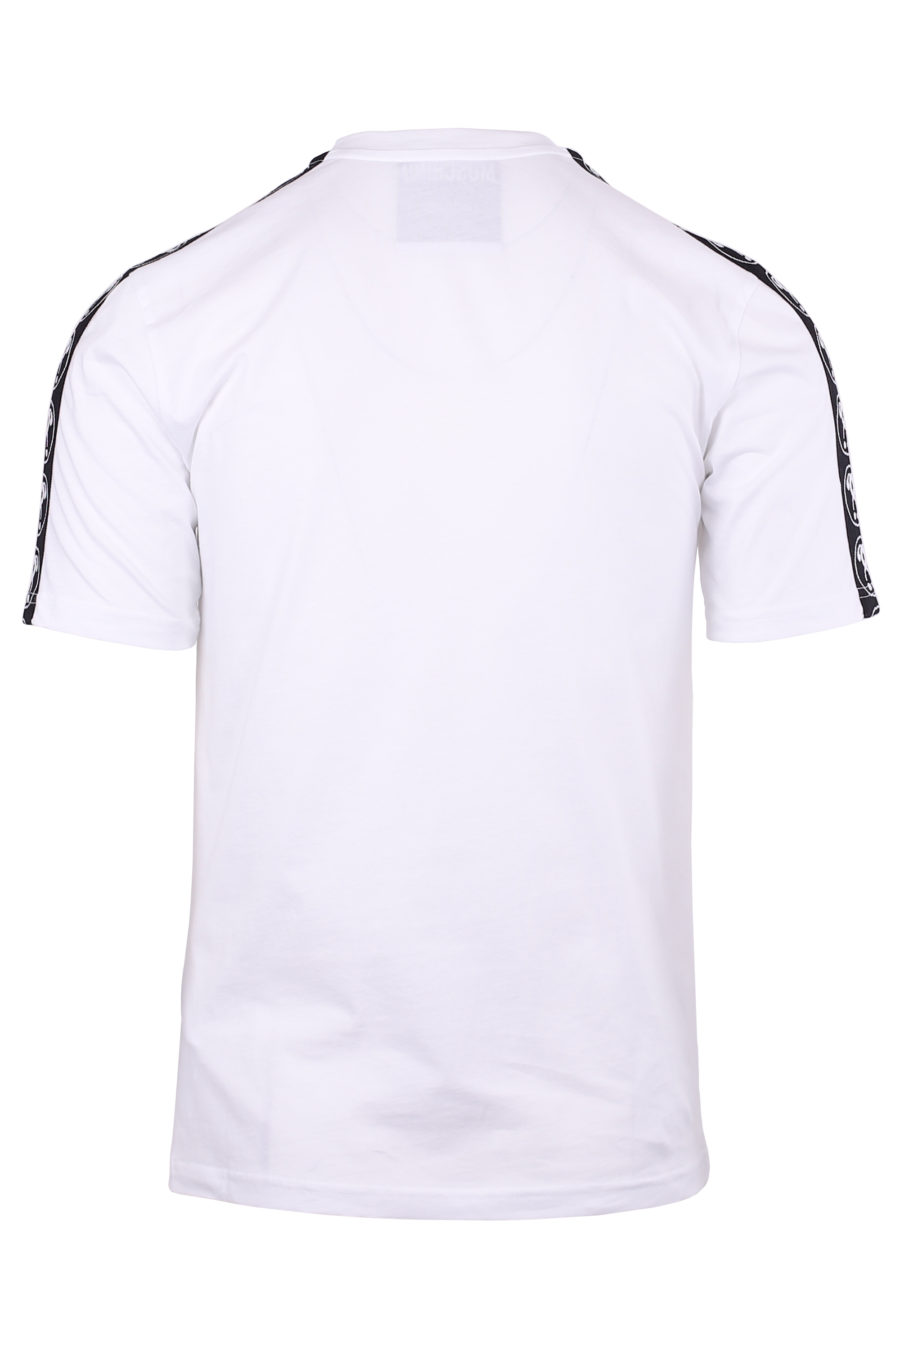 Camiseta blanca logo negro parte delantera y mangas - IMG 9970